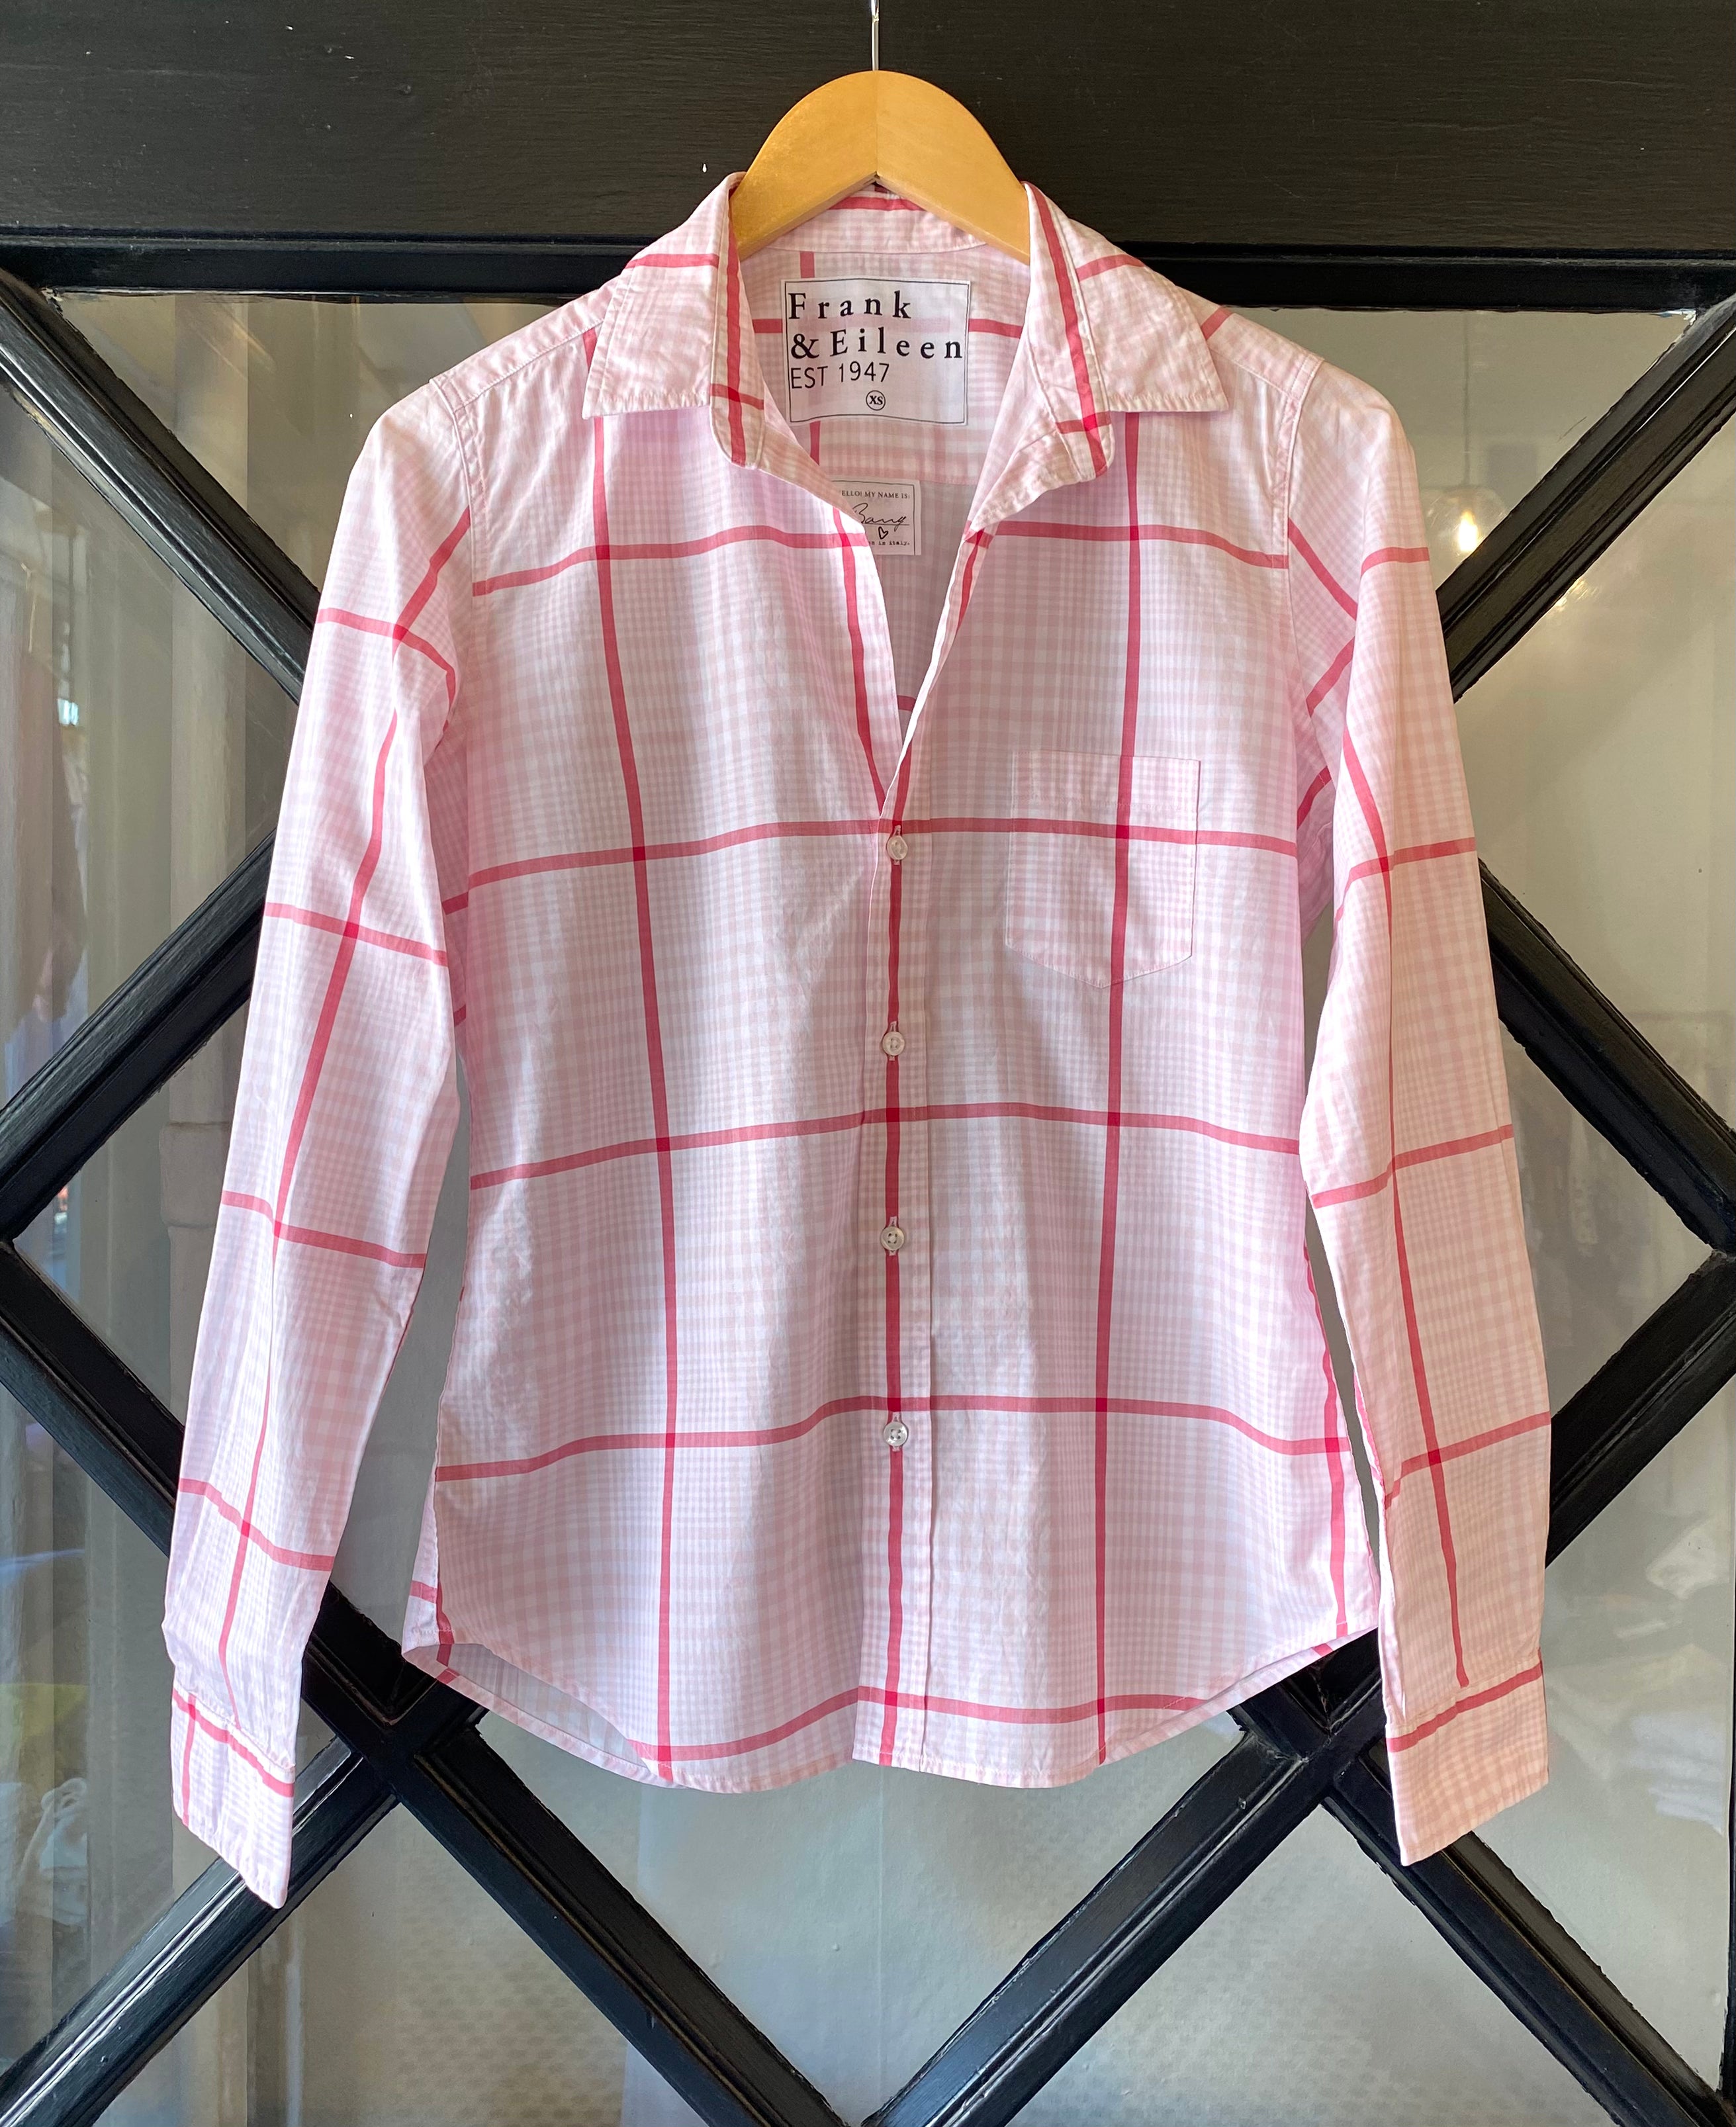 Frank & Eileen Barry Tailored Button Up Shirt Pink Magenta Plaid